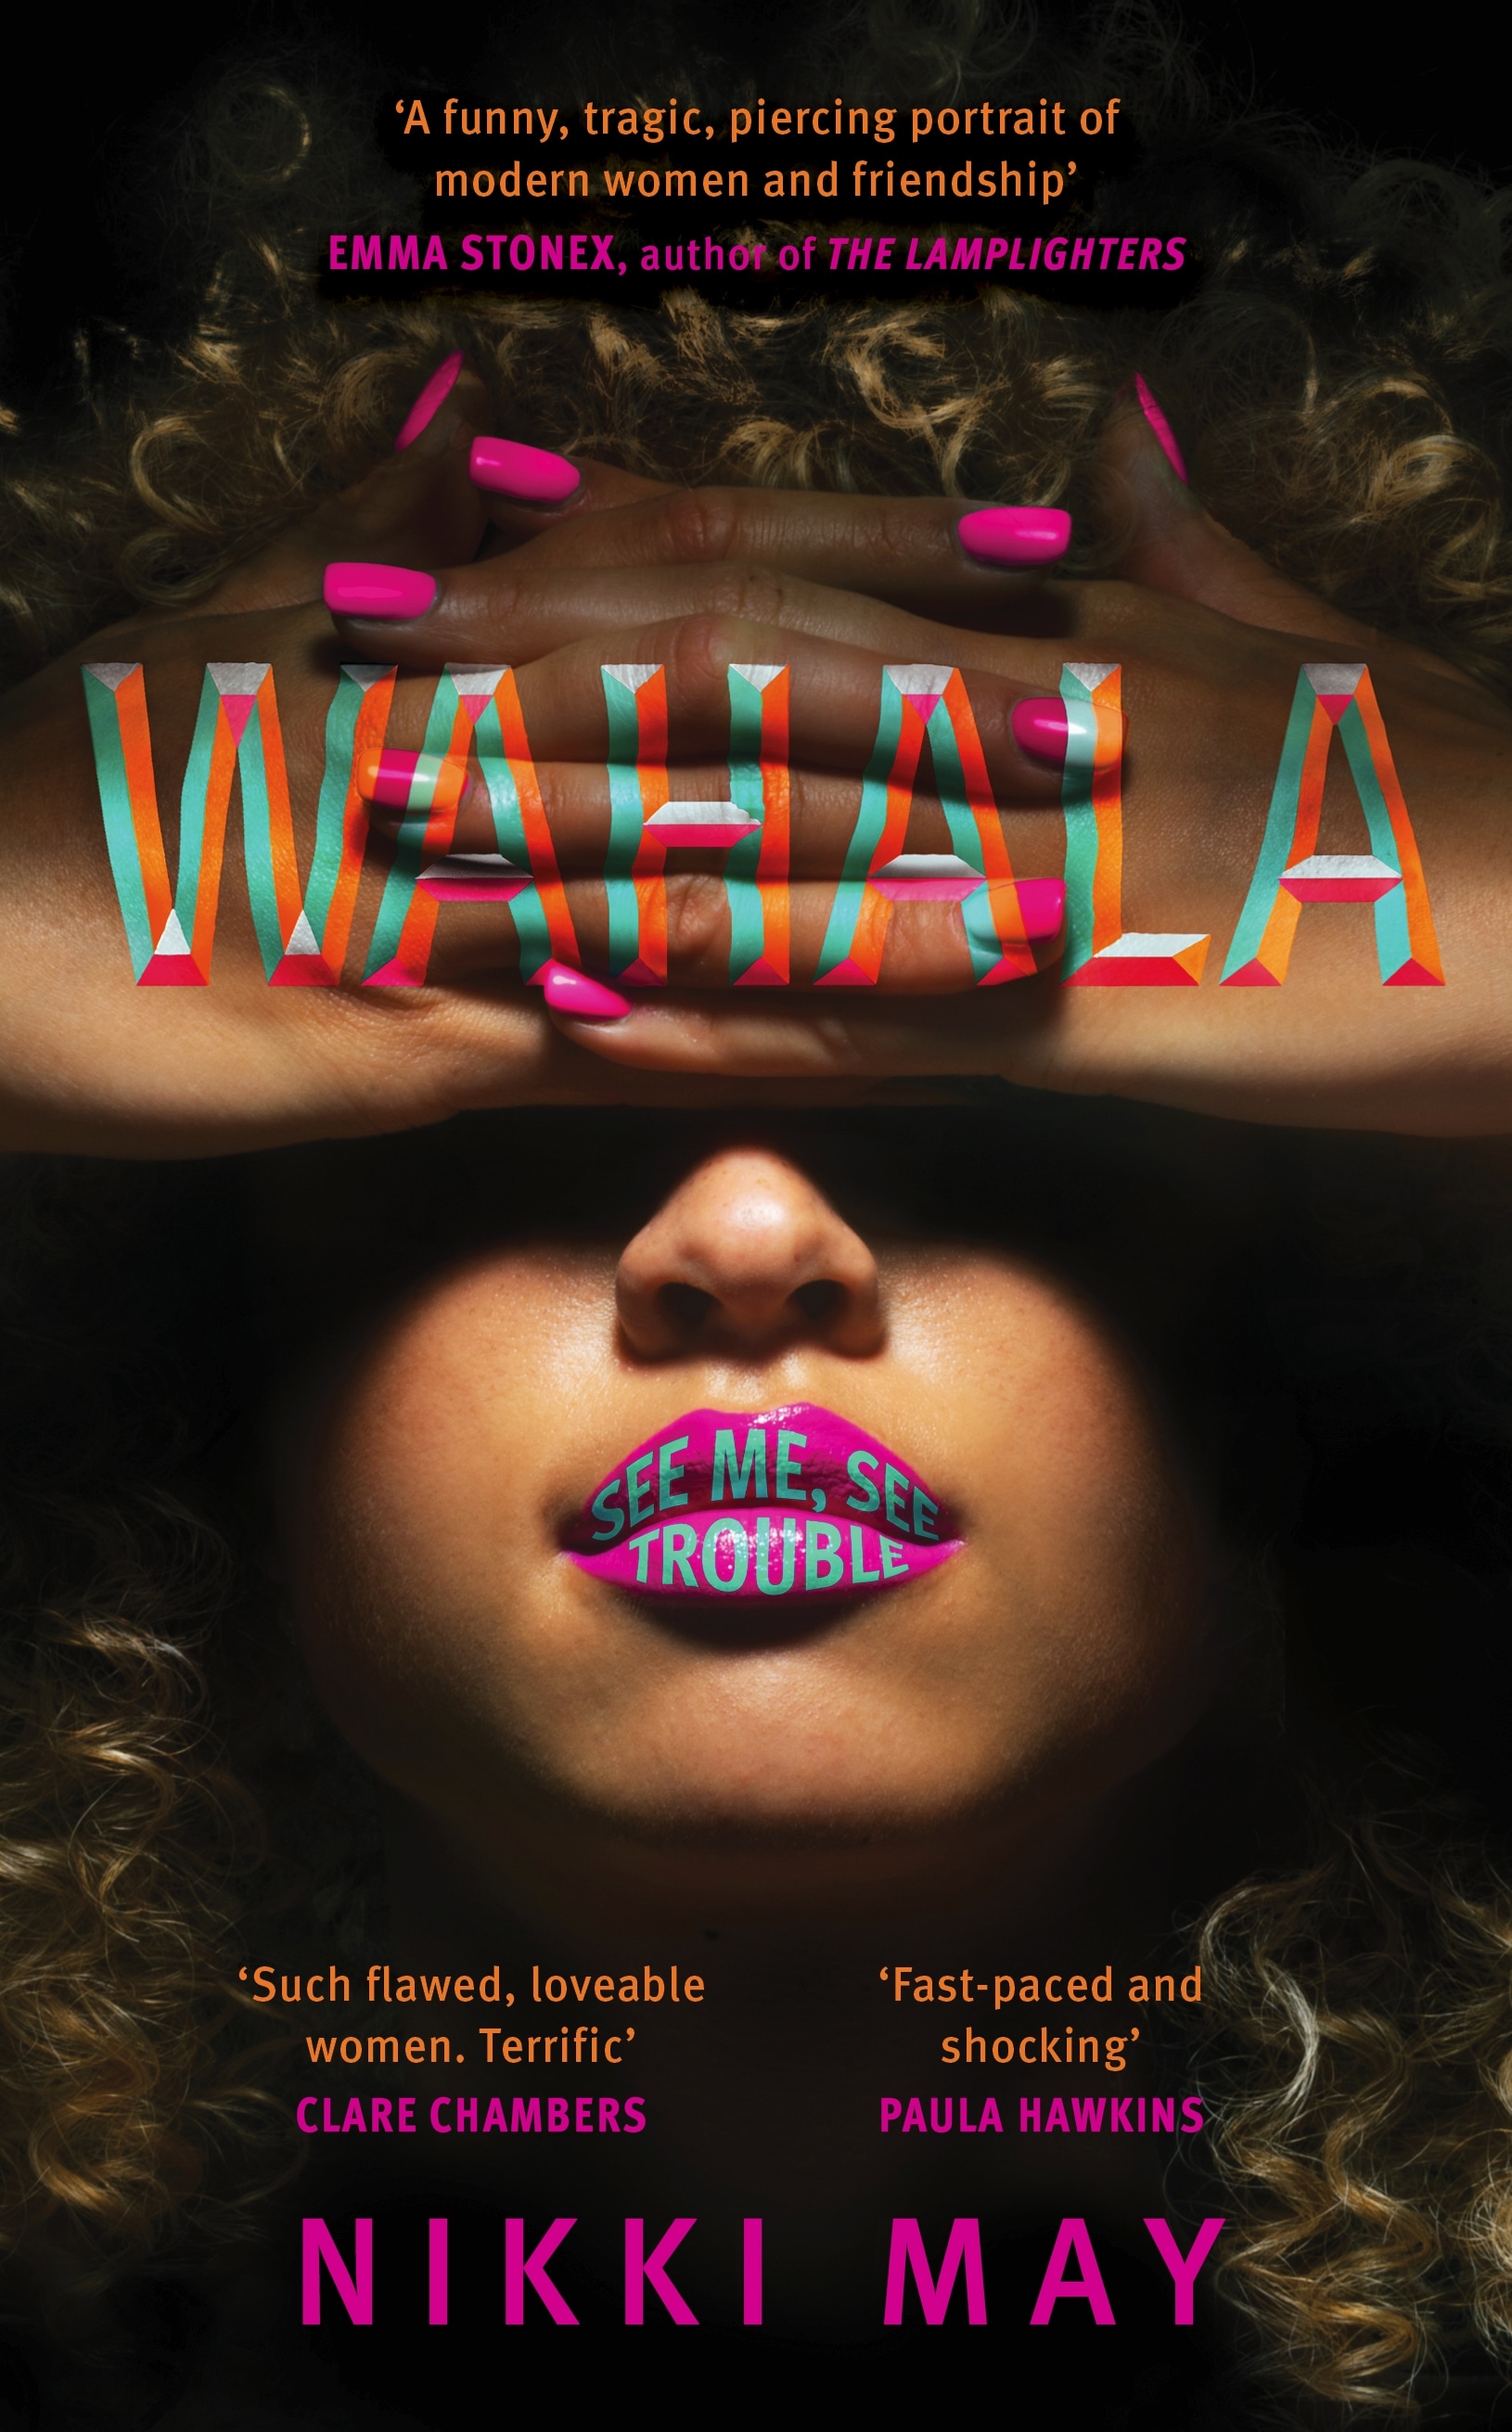 Book “Wahala” by Nikki May — January 6, 2022